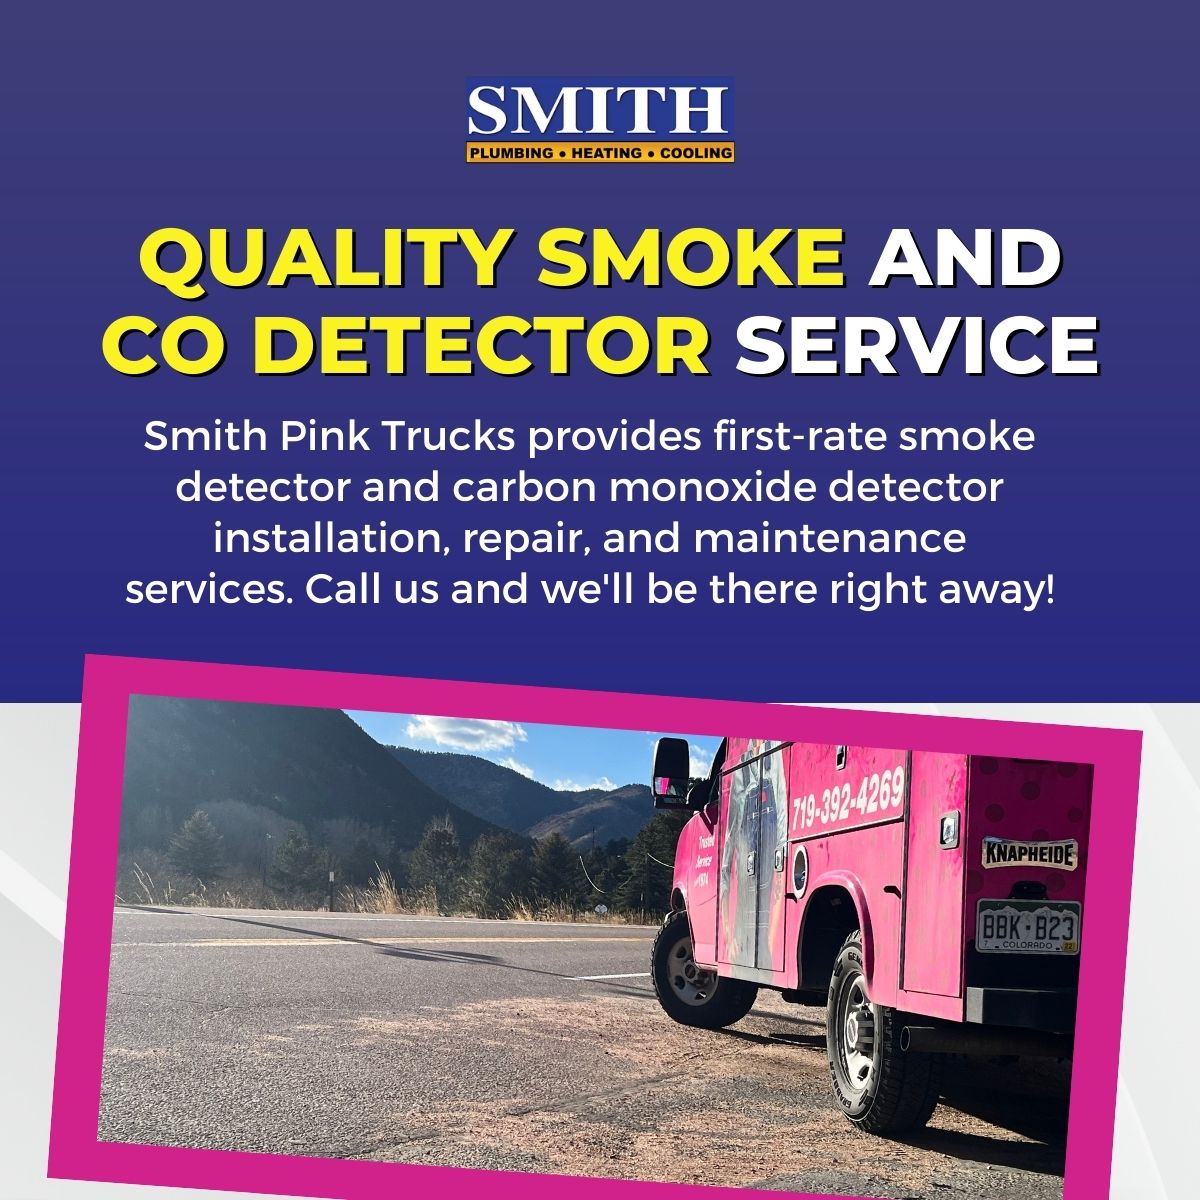 Quality smoke and CO detector